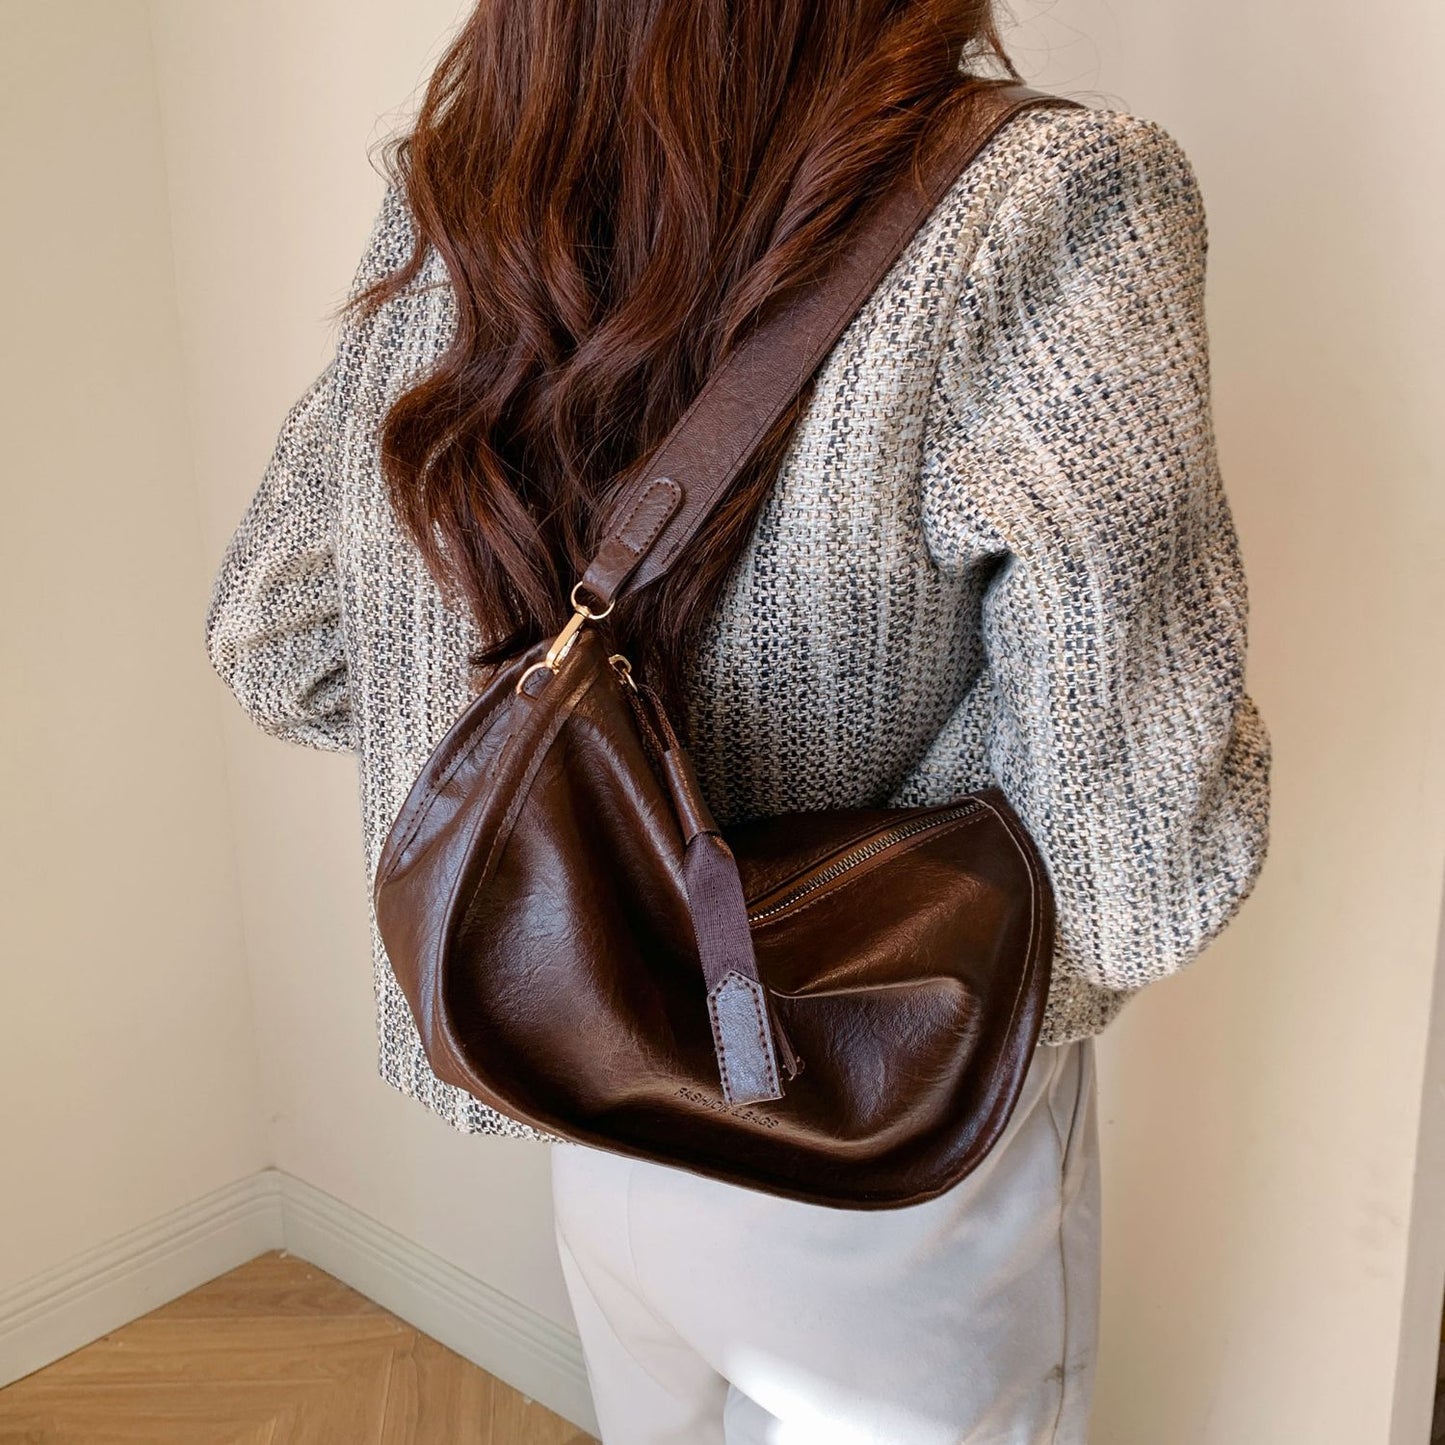 PU Leather Double Strap Shoulder Bag